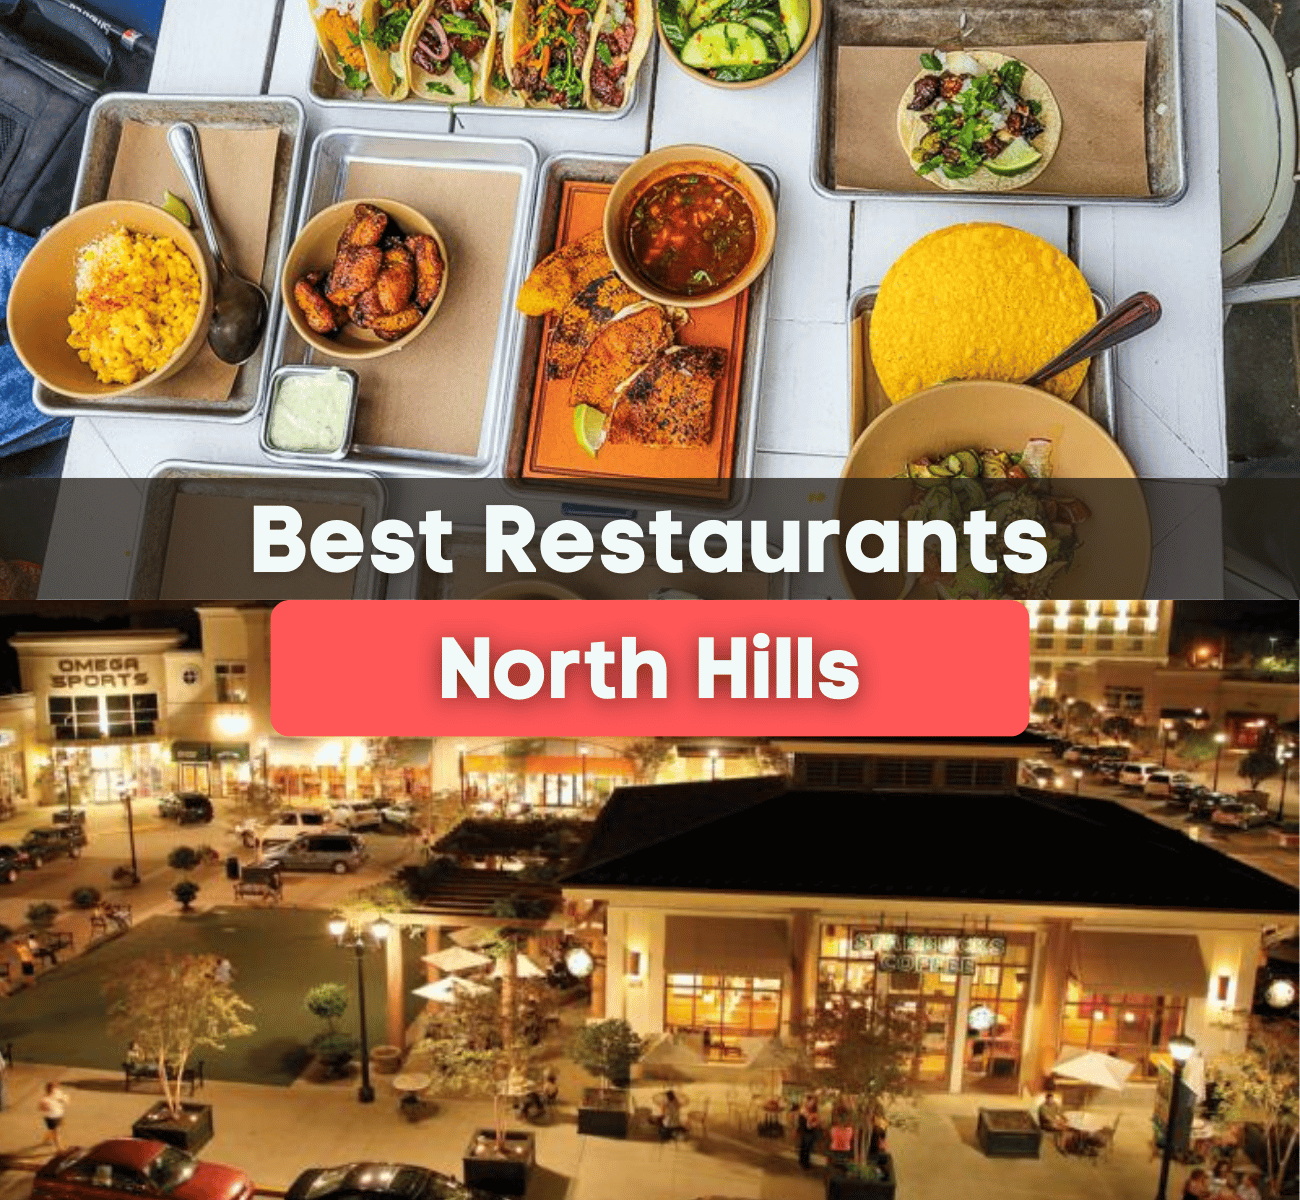 best restaurants North Hills - food and north hills shopping center 